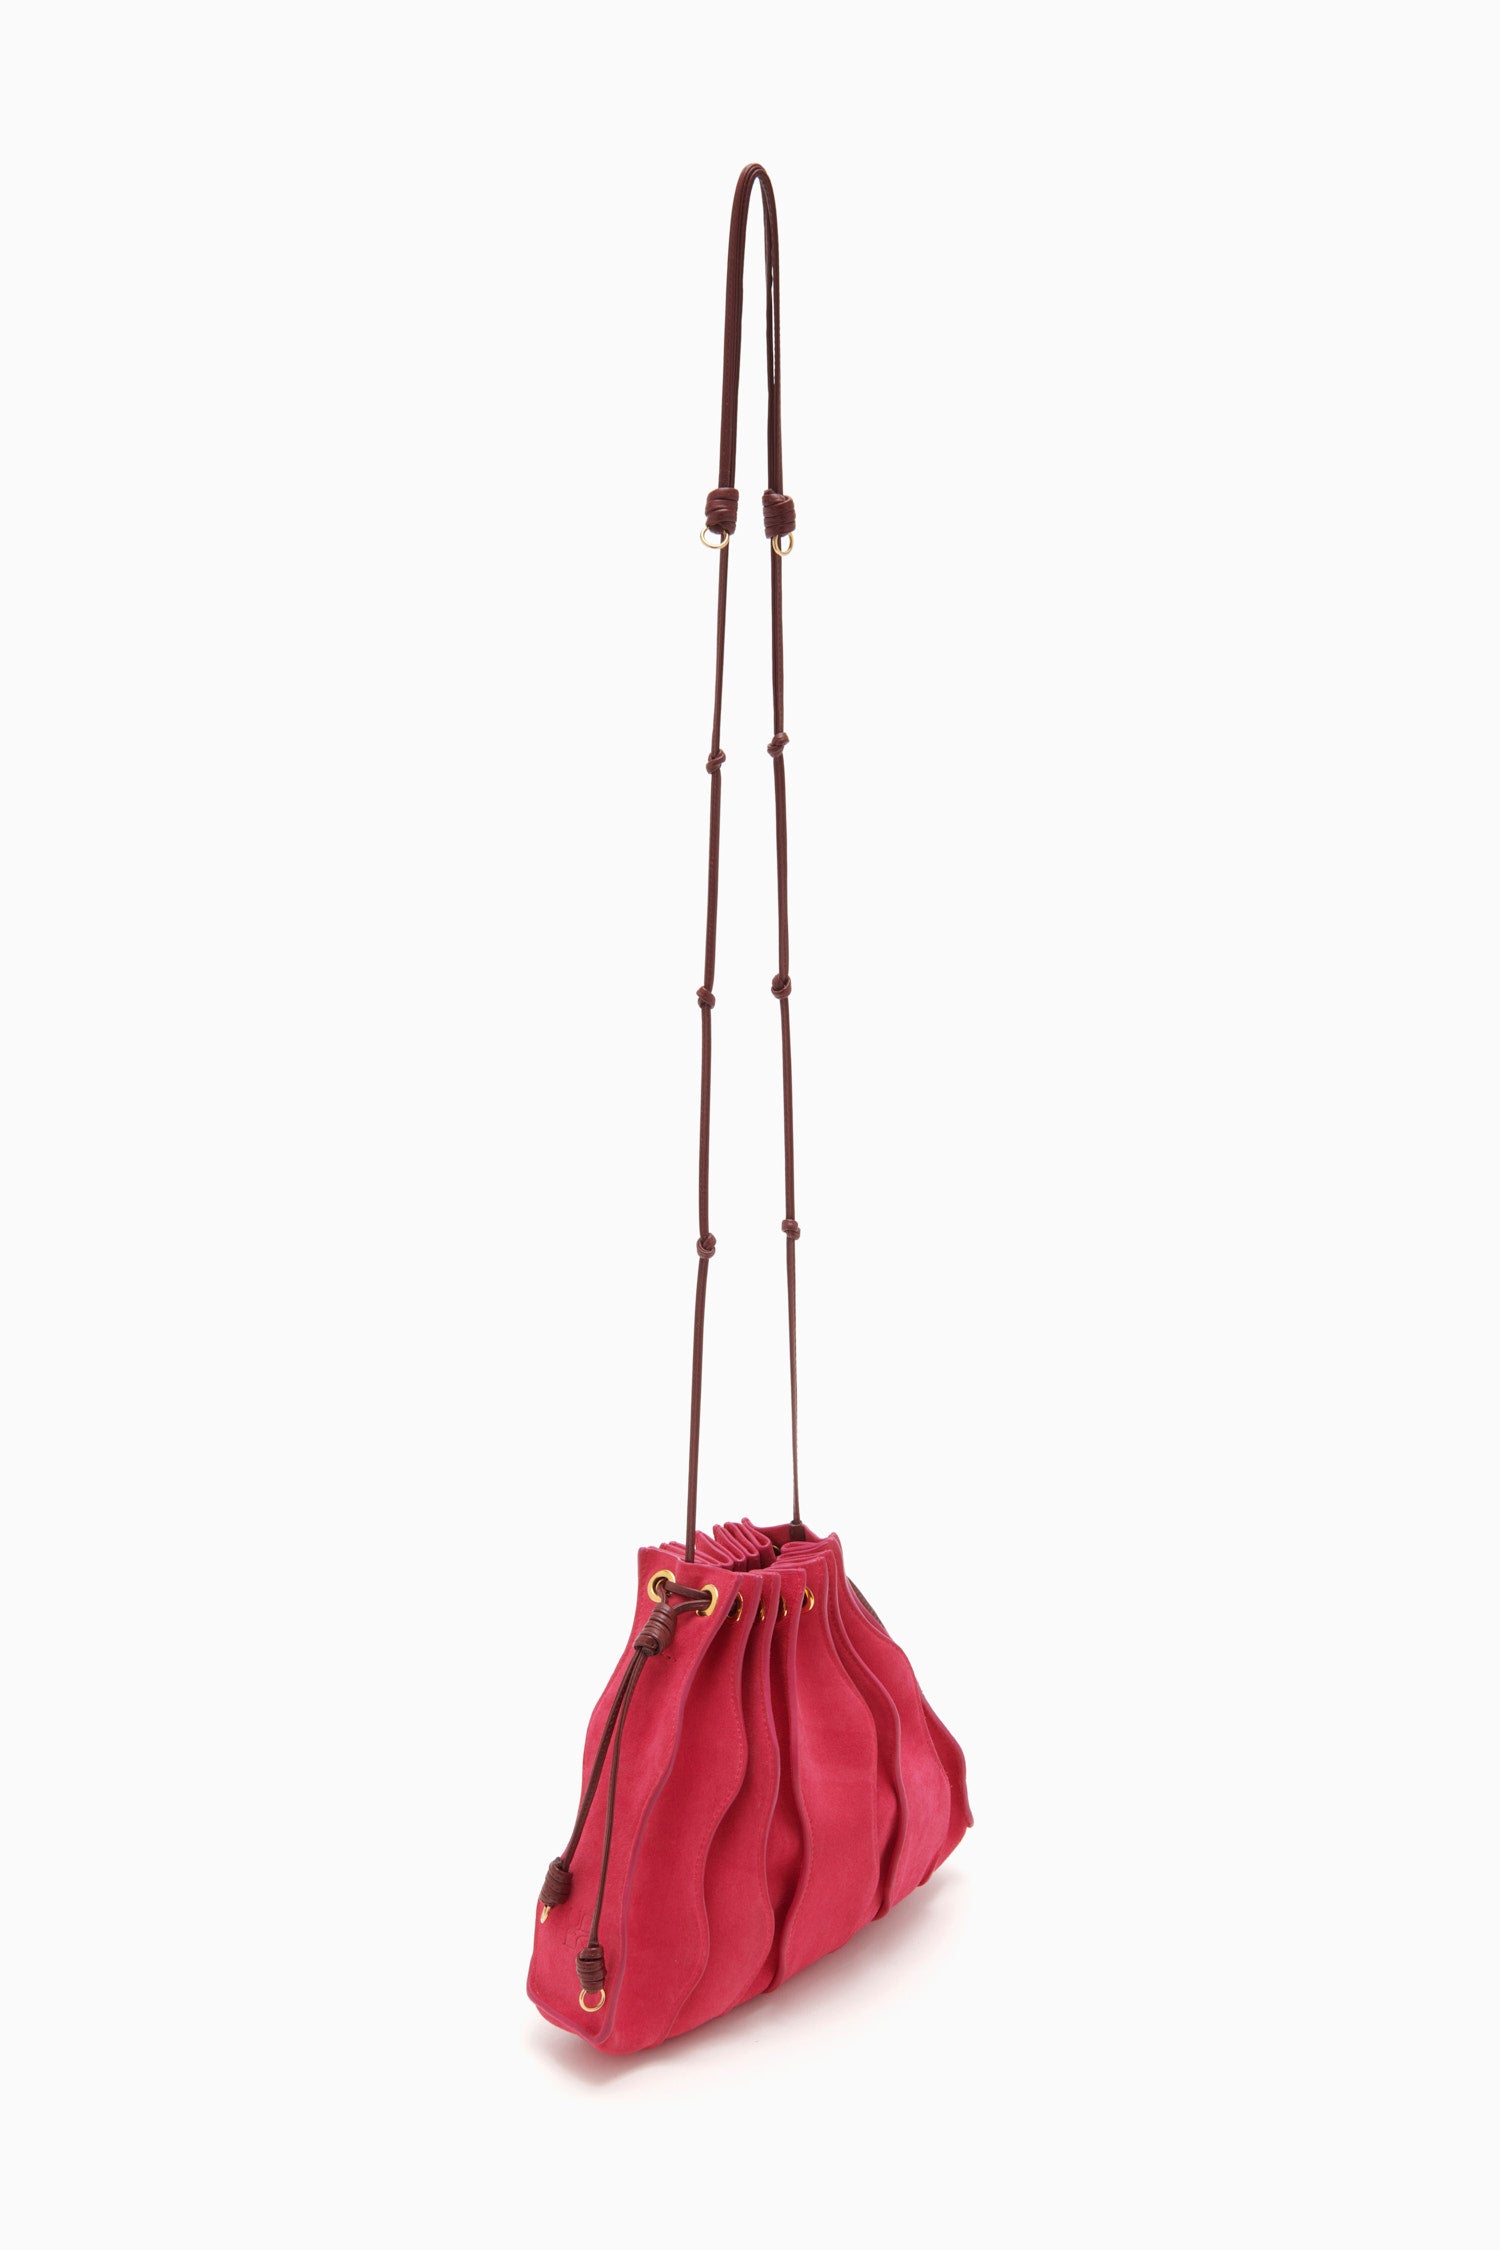 Ulla Johnson Adria Small Pleated Wave Bag - Orchid Colorblock